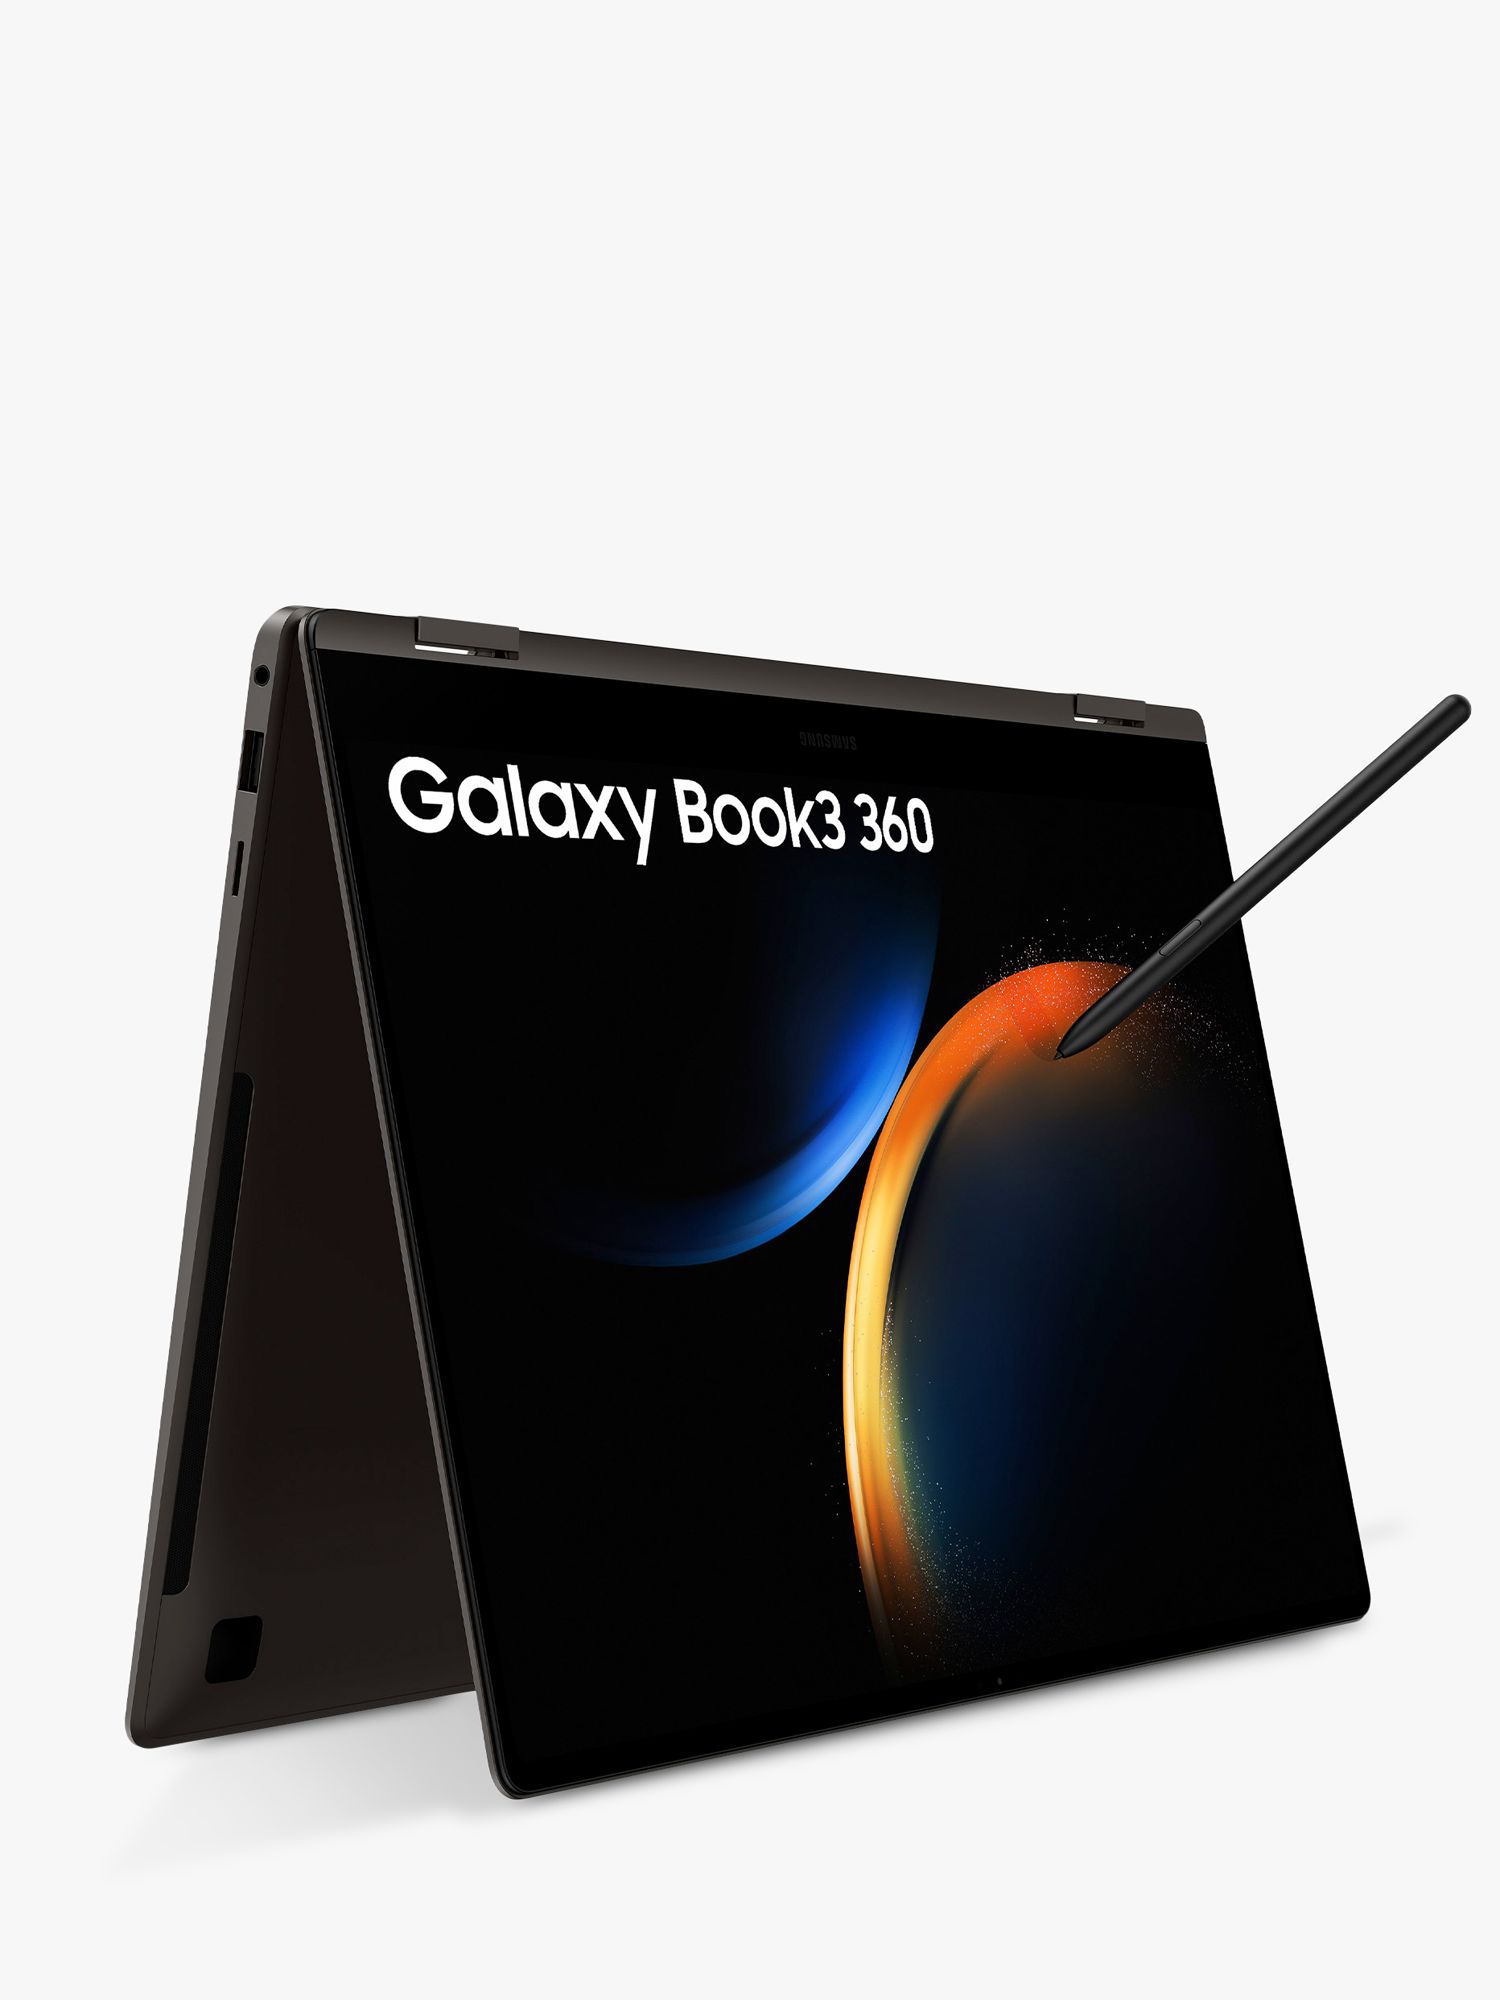 Core　Samsung　Convertible　360　Intel　Galaxy　8GB　SSD,　Processor,　Screen,　Book3　RAM,　Laptop,　i5　Touch　AMOLED　256GB　15.6